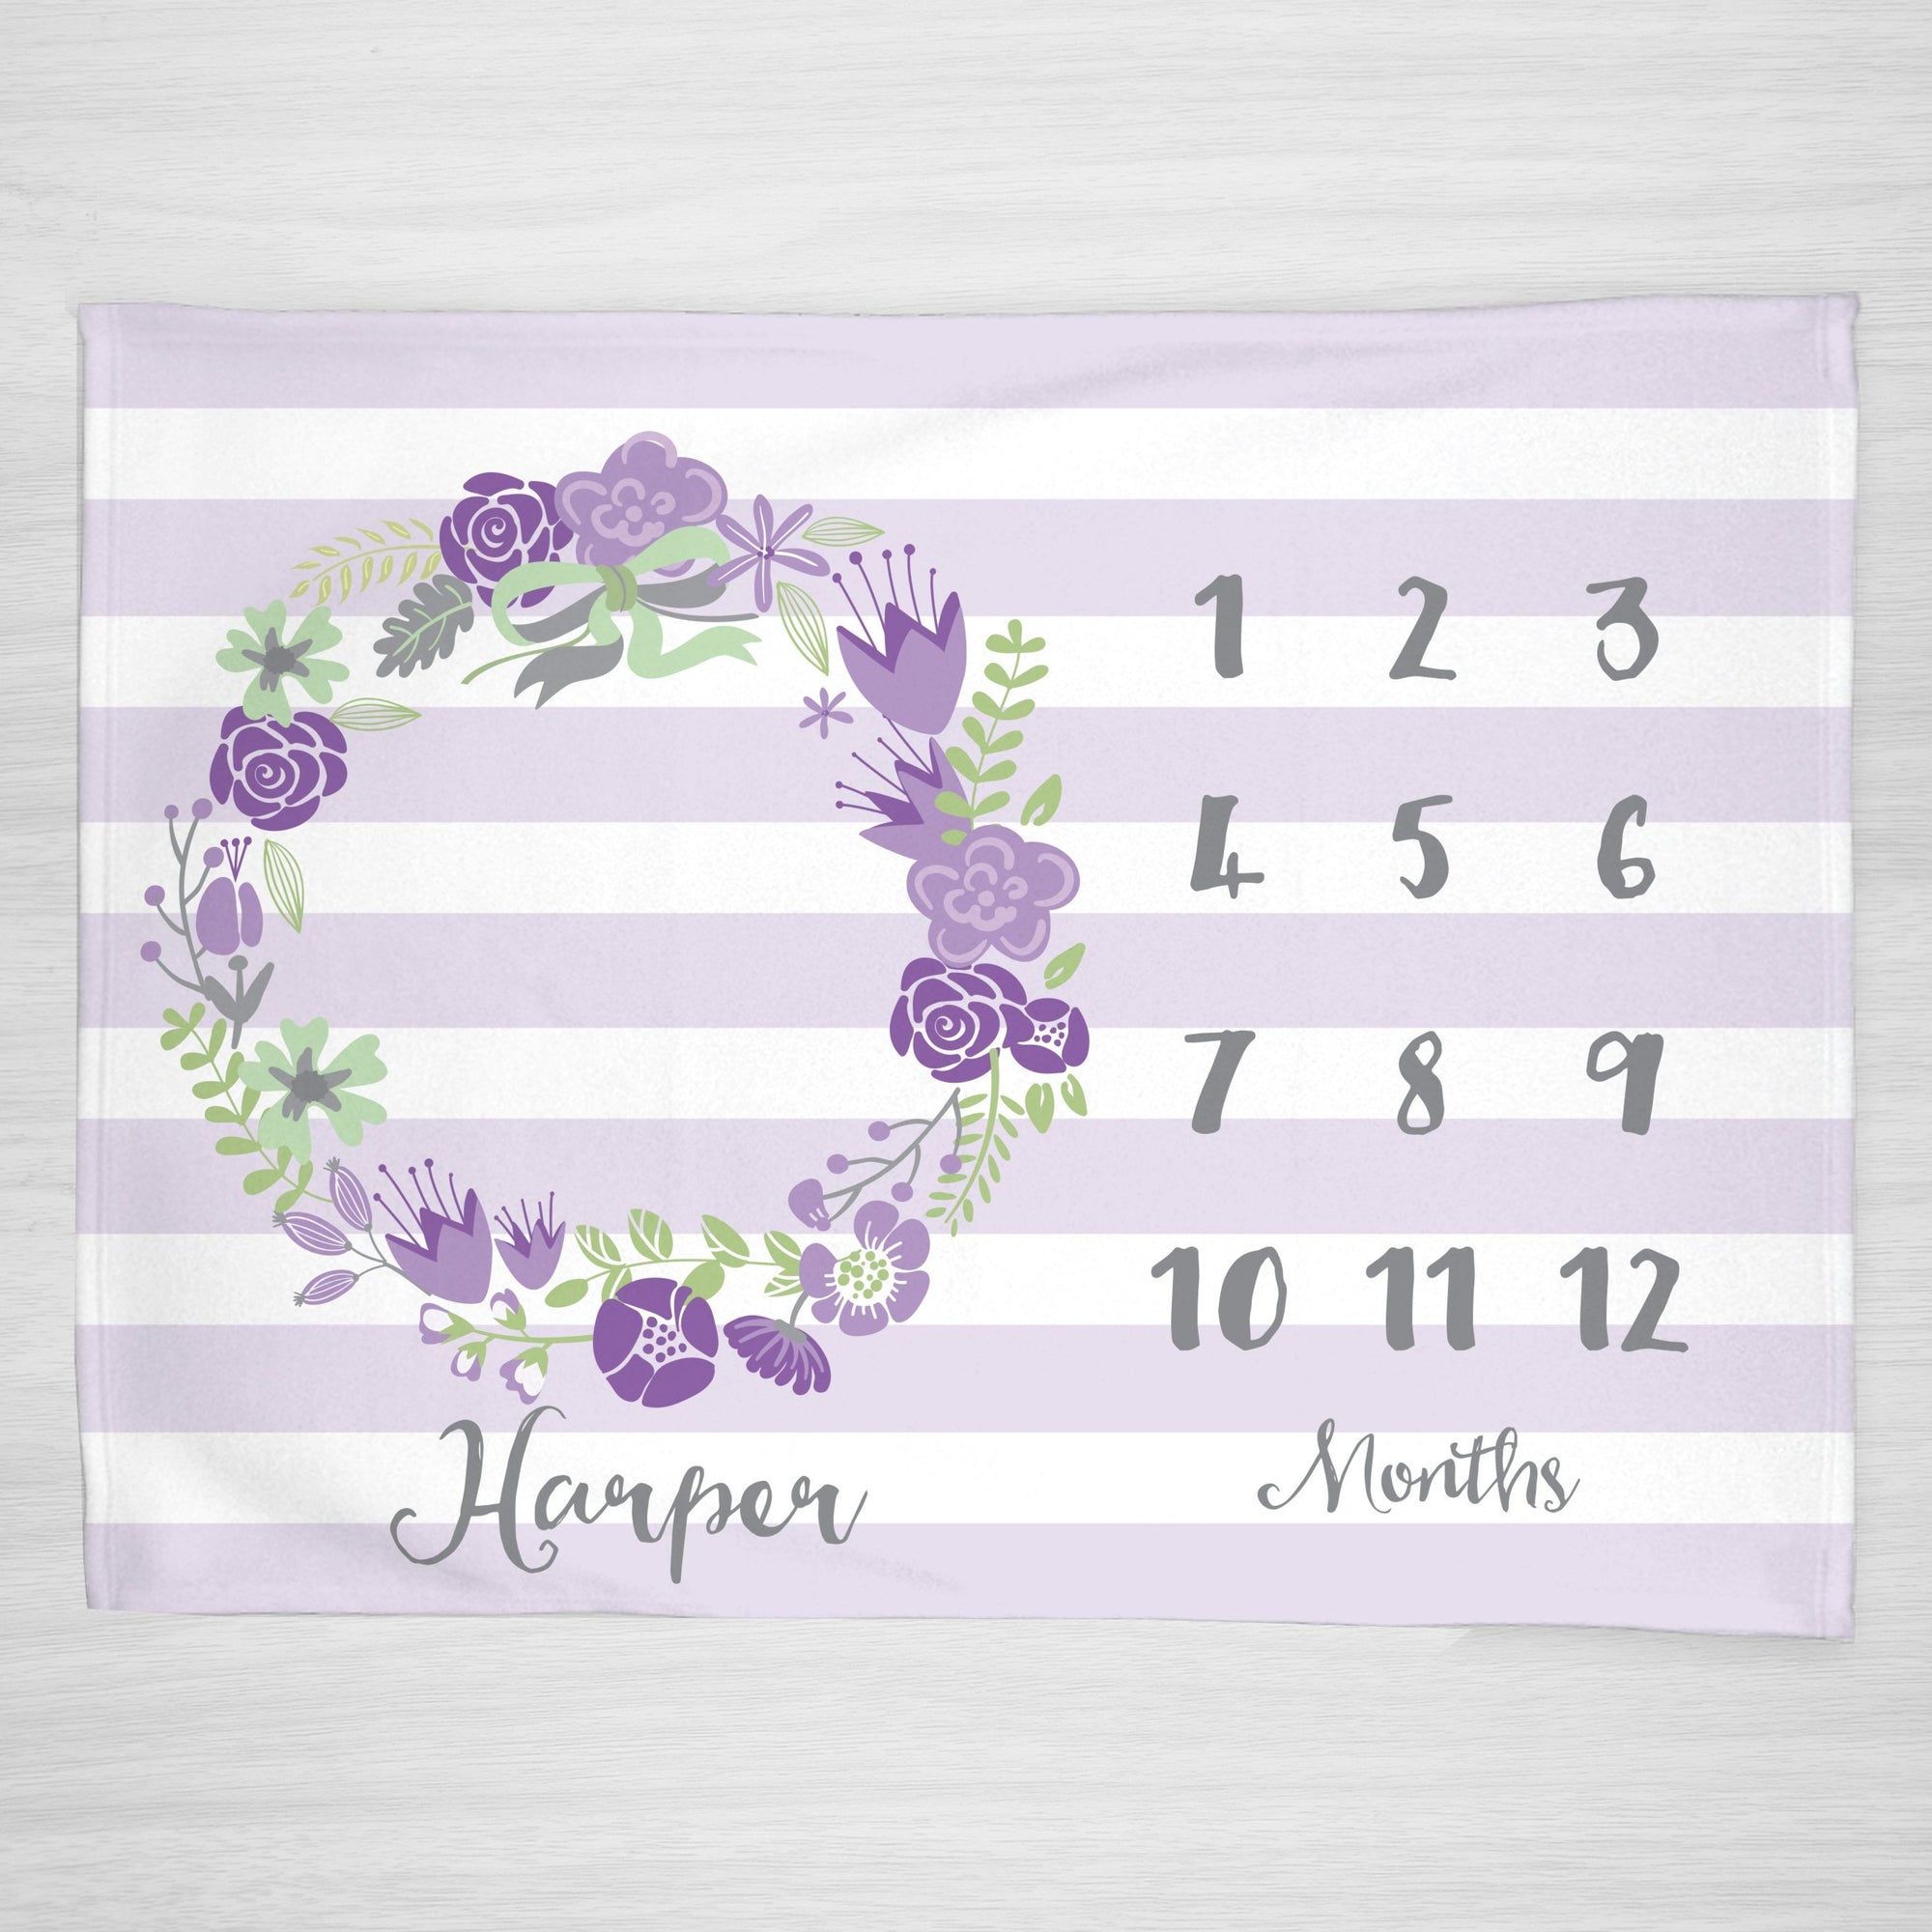 Personalized Girl Milestone Blanket, Purple stripes and flower wreath